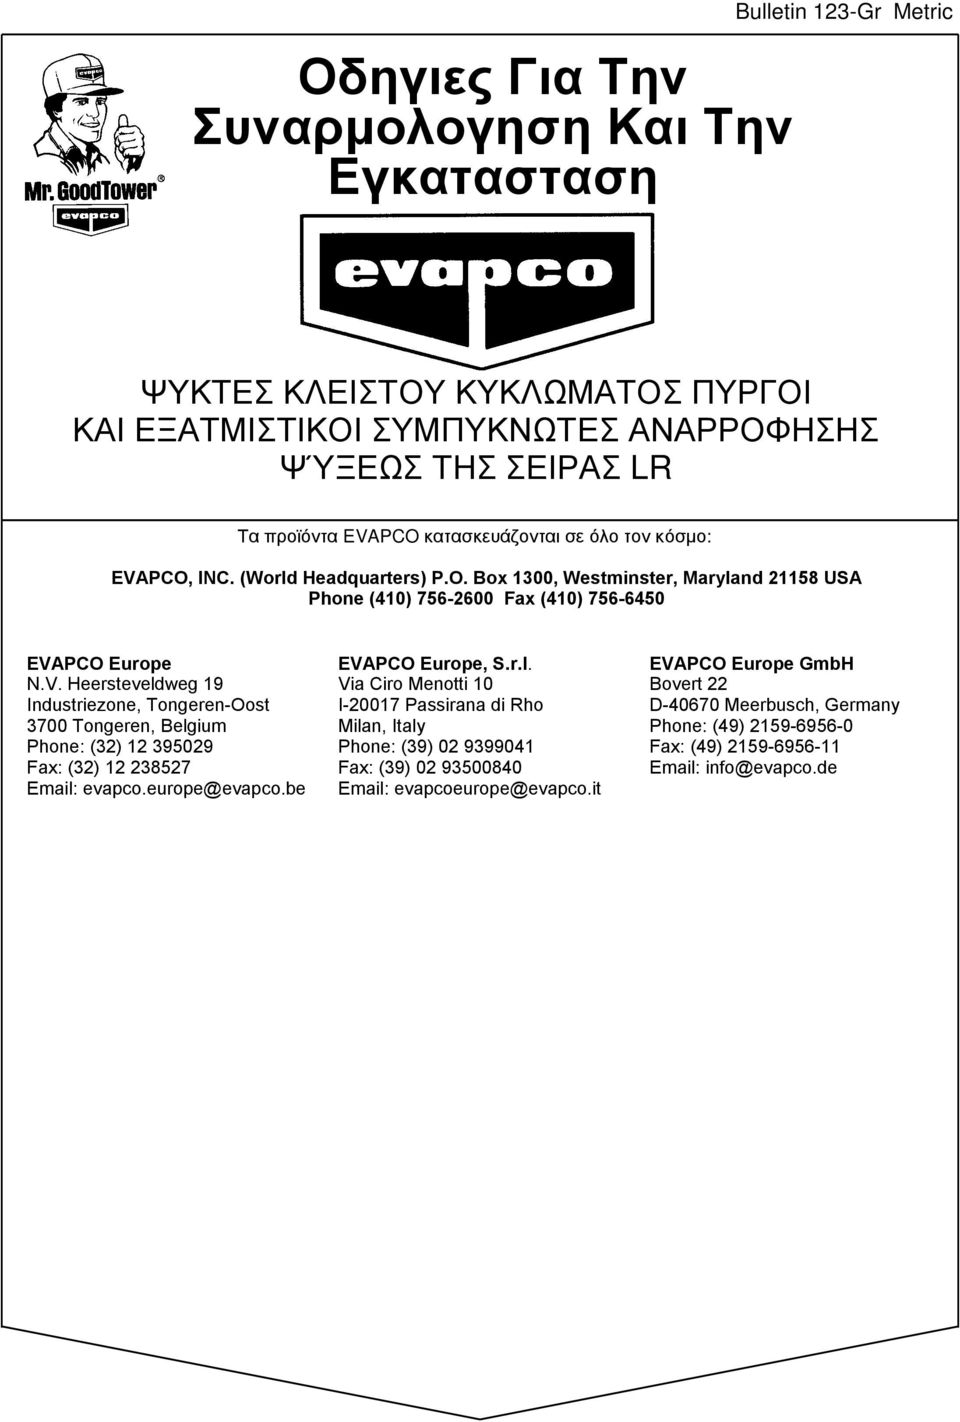 europe@evapco.be EVAPCO Europe, S.r.l. Via Ciro Menotti 10 I-20017 Passirana di Rho Milan, Italy Phone: (39) 02 9399041 Fax: (39) 02 93500840 Email: evapcoeurope@evapco.